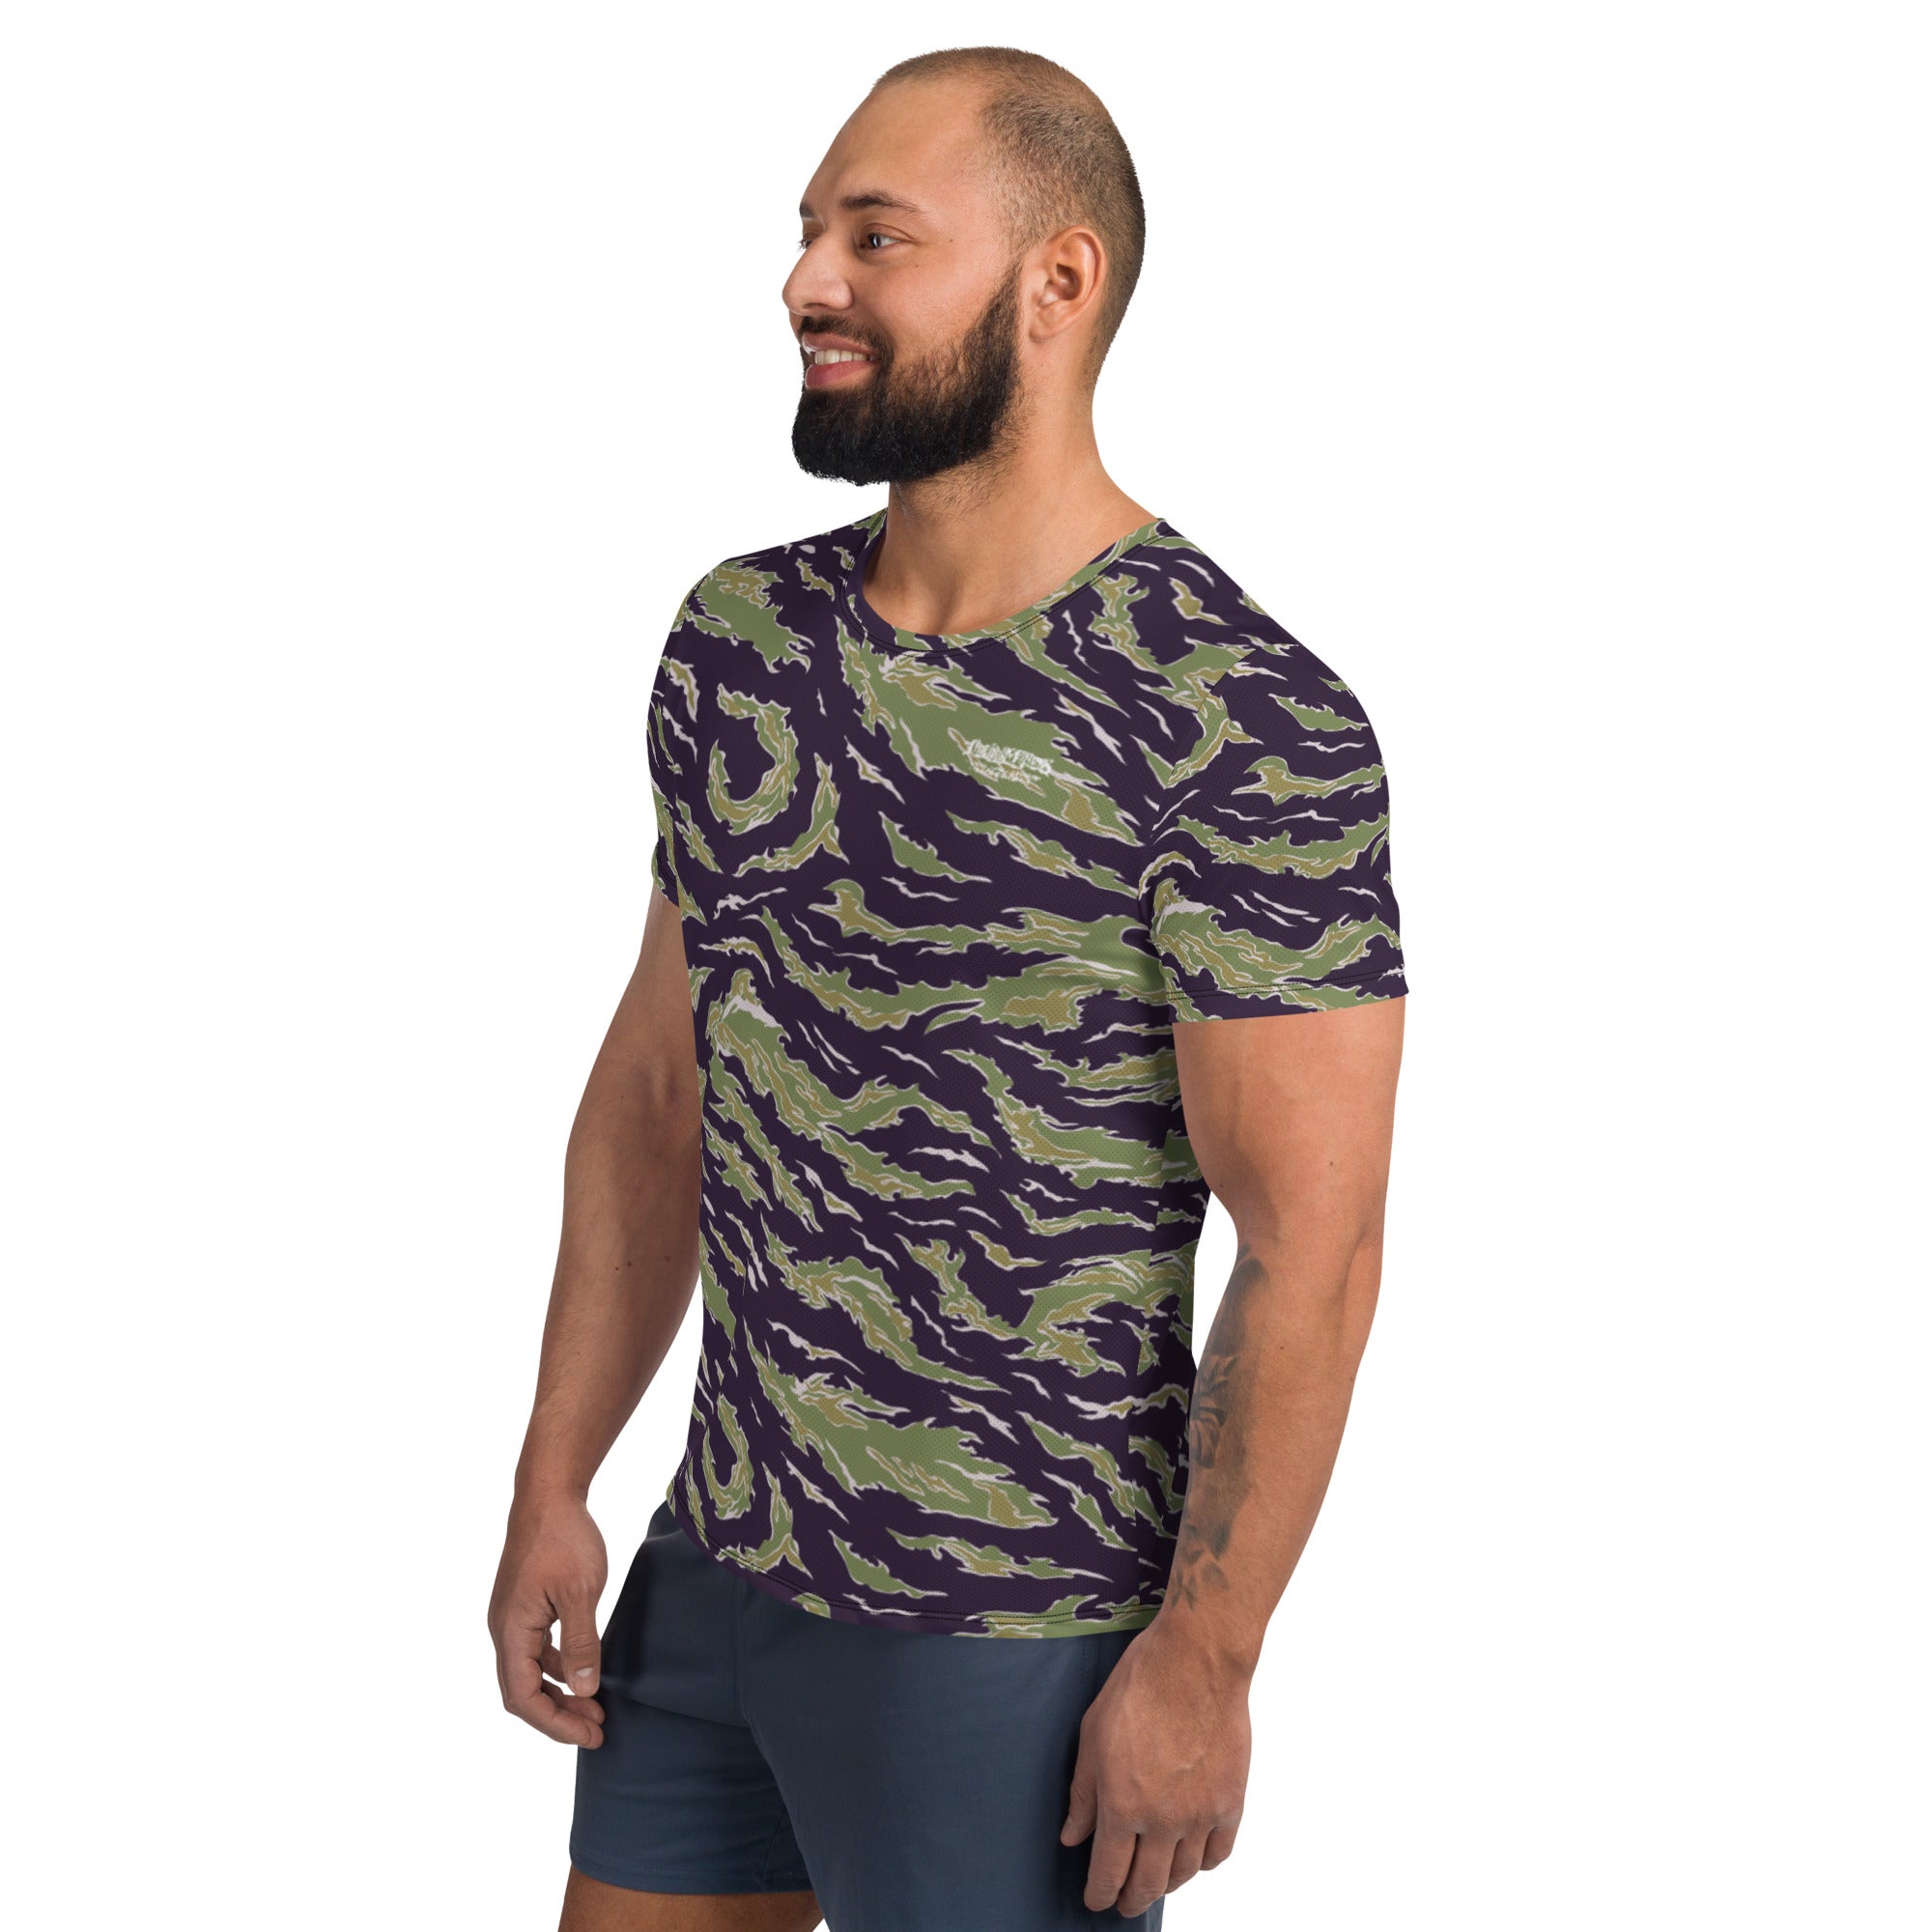 Tiger Stripe Jungle Camouflage Athletic Performance Shorts Sleeve T-Shirt